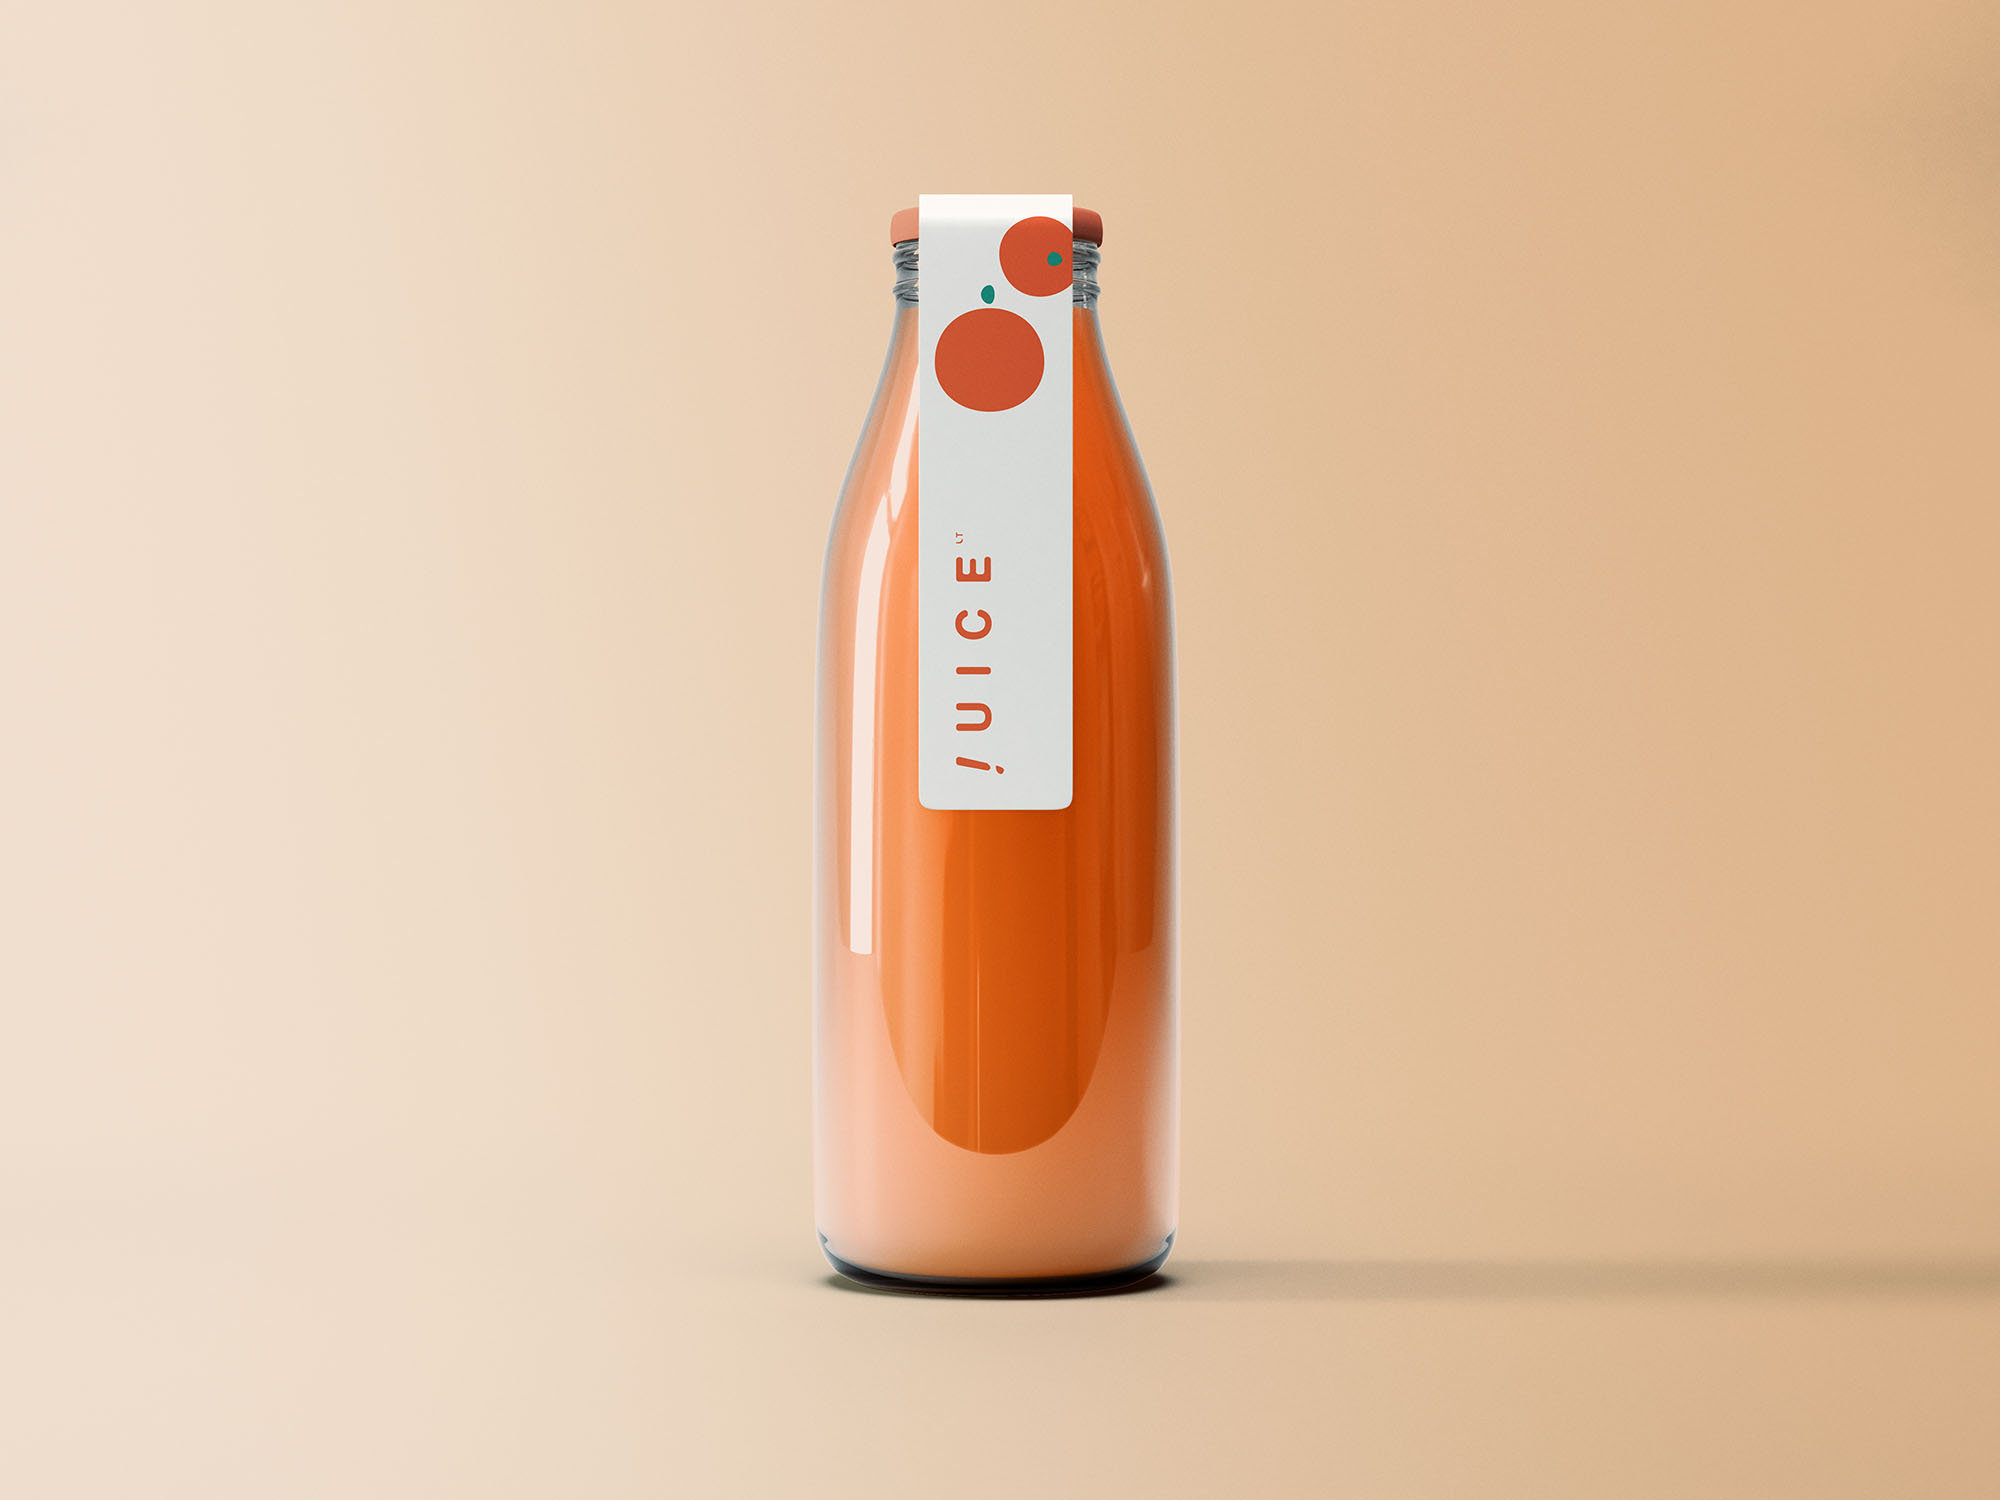 https://resourceboy.com/wp-content/uploads/2023/04/front-view-of-realistic-labeled-juice-bottle-mockup.jpg